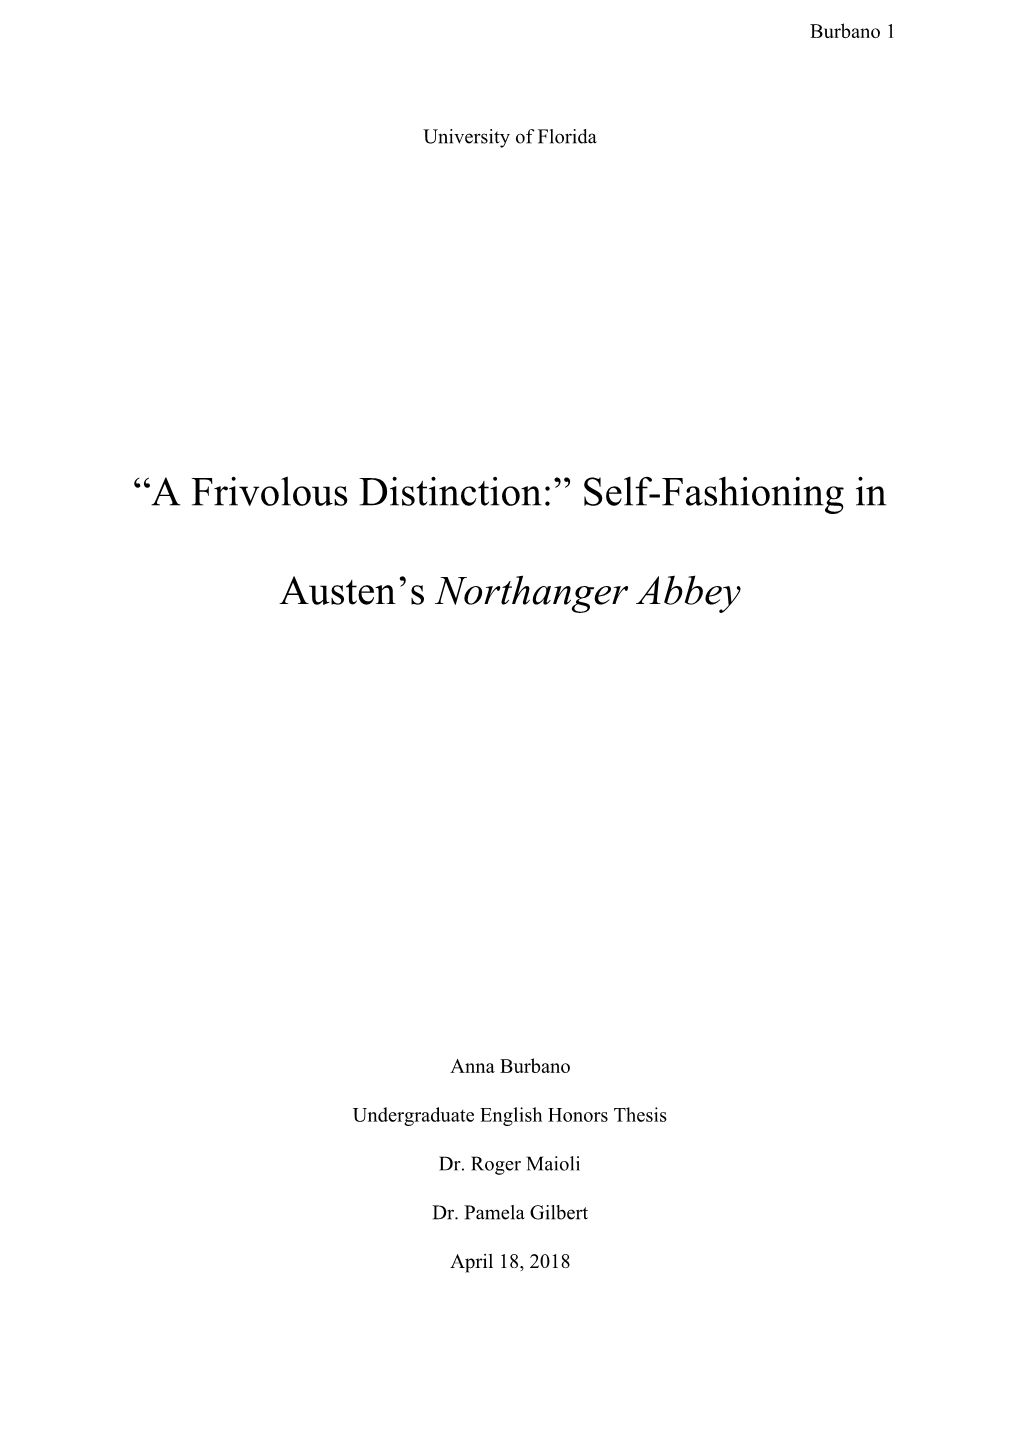 “A Frivolous Distinction:” Self-Fashioning in Austen's ​Northanger Abbey